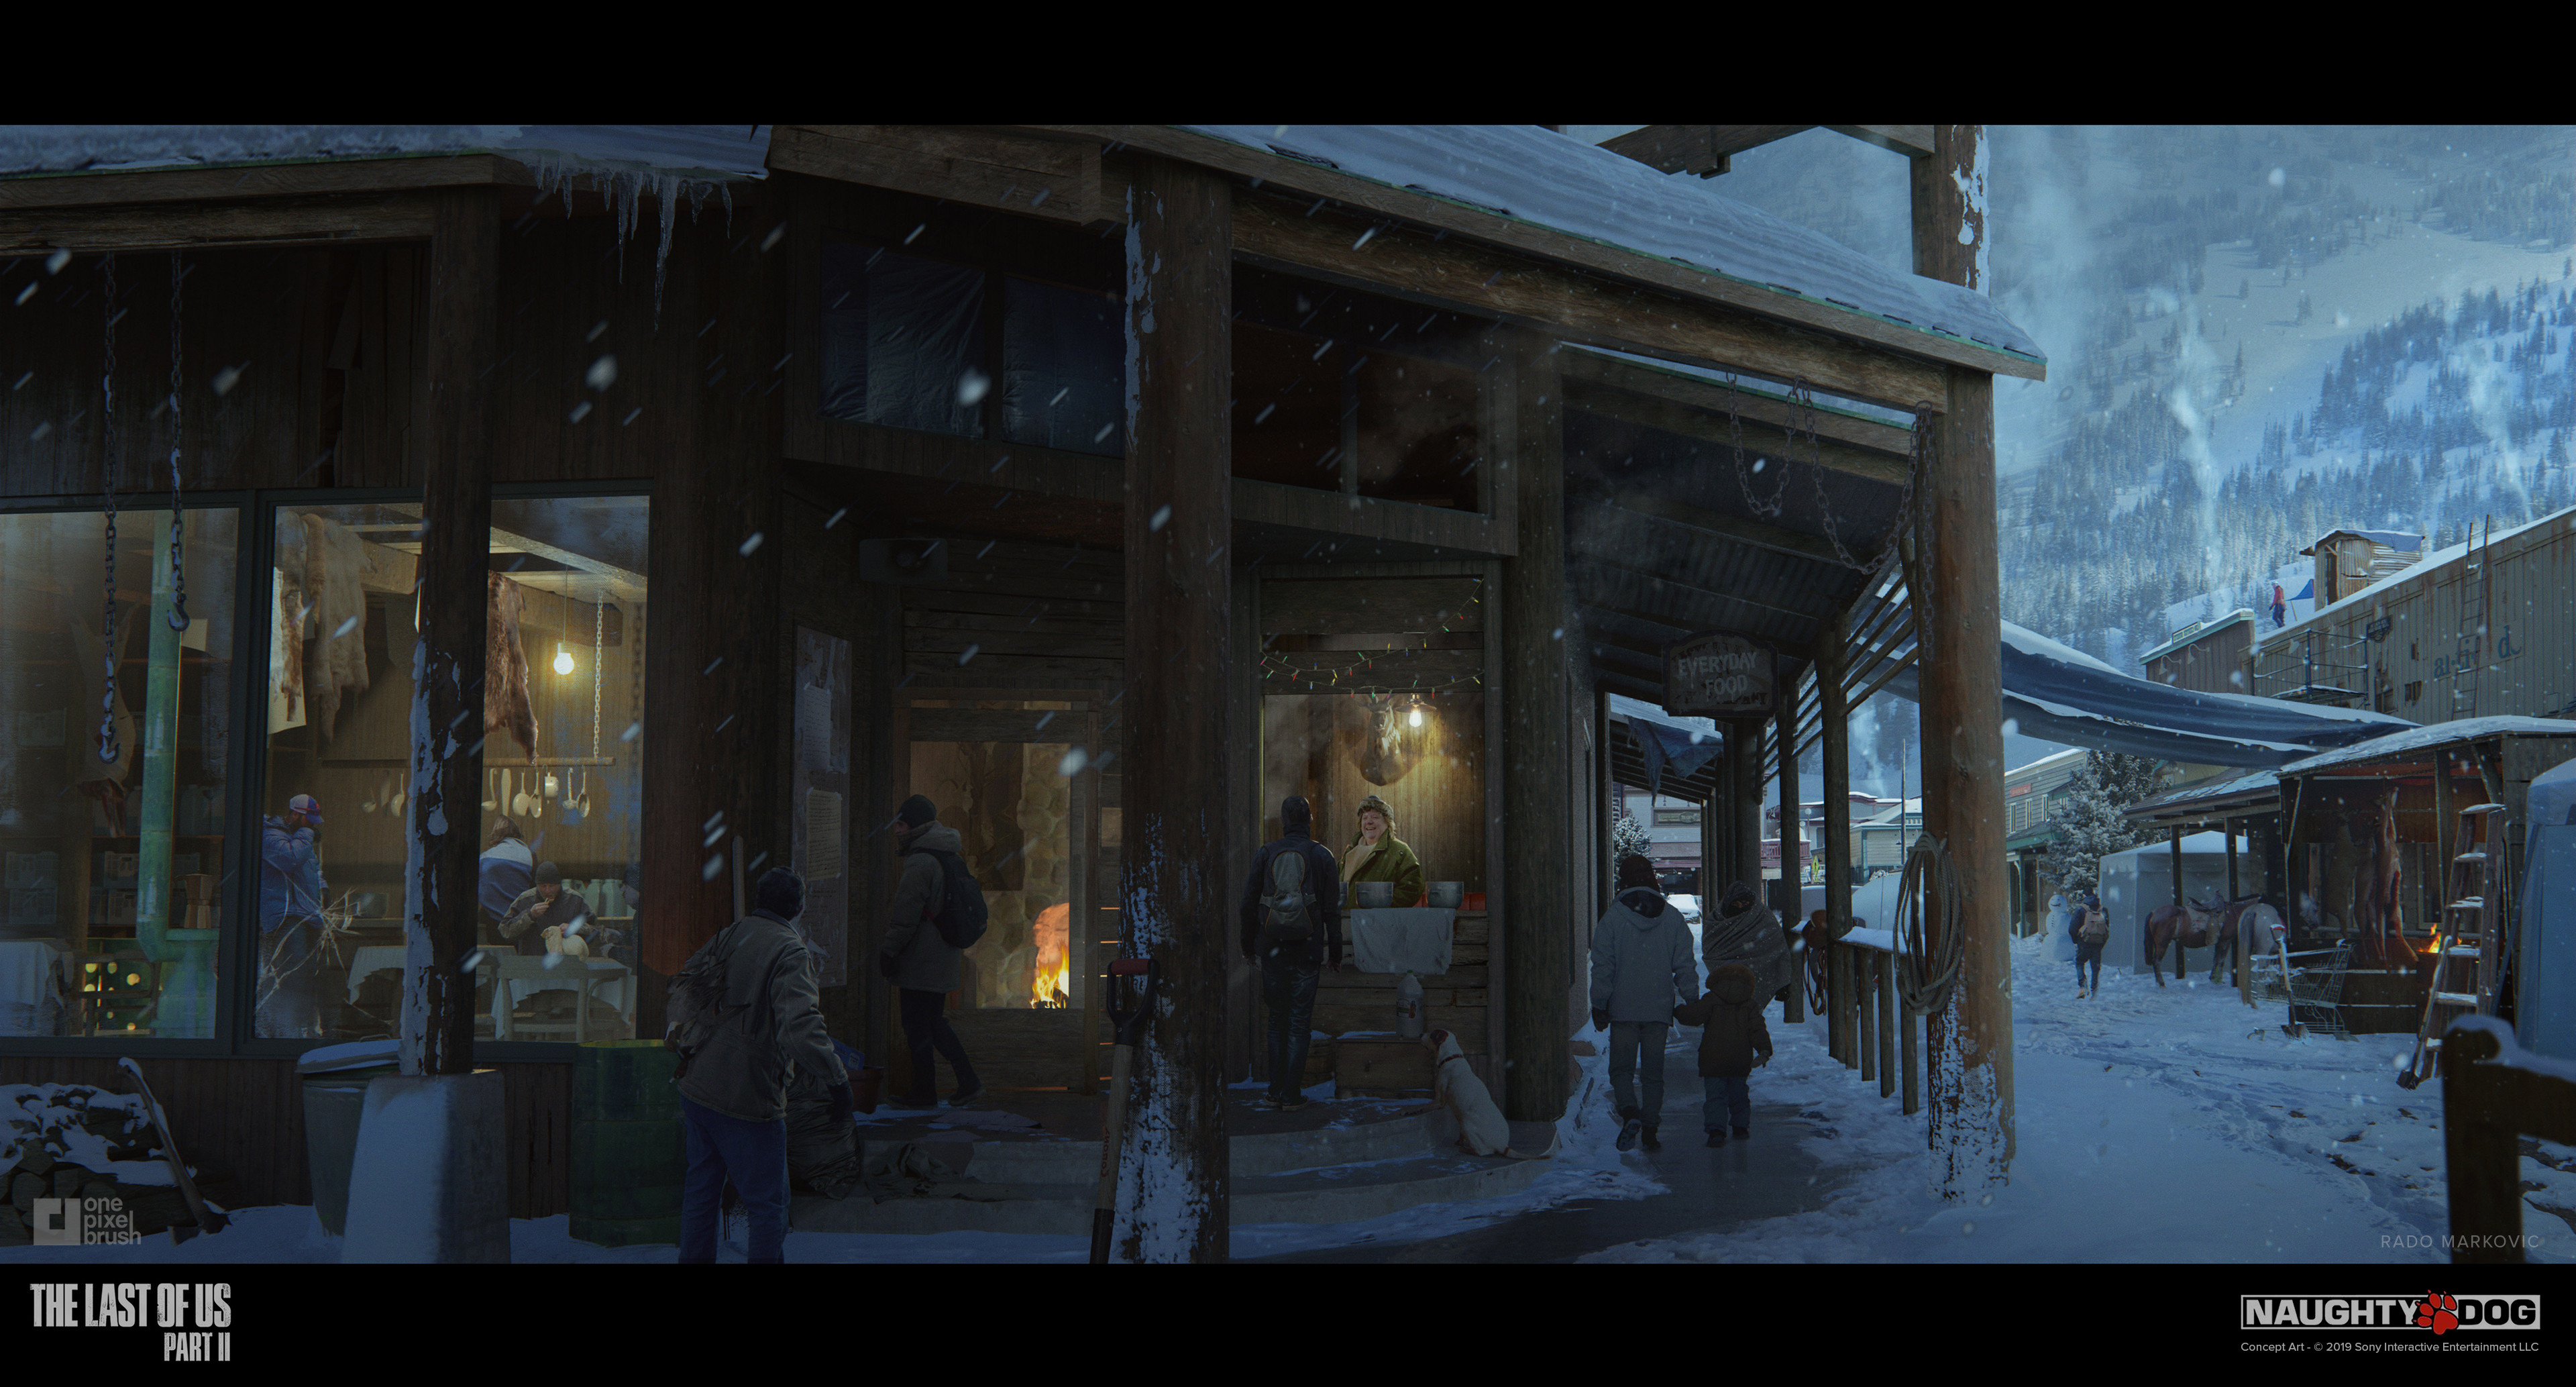 The Last of Us Part II Art by Rado Markovic